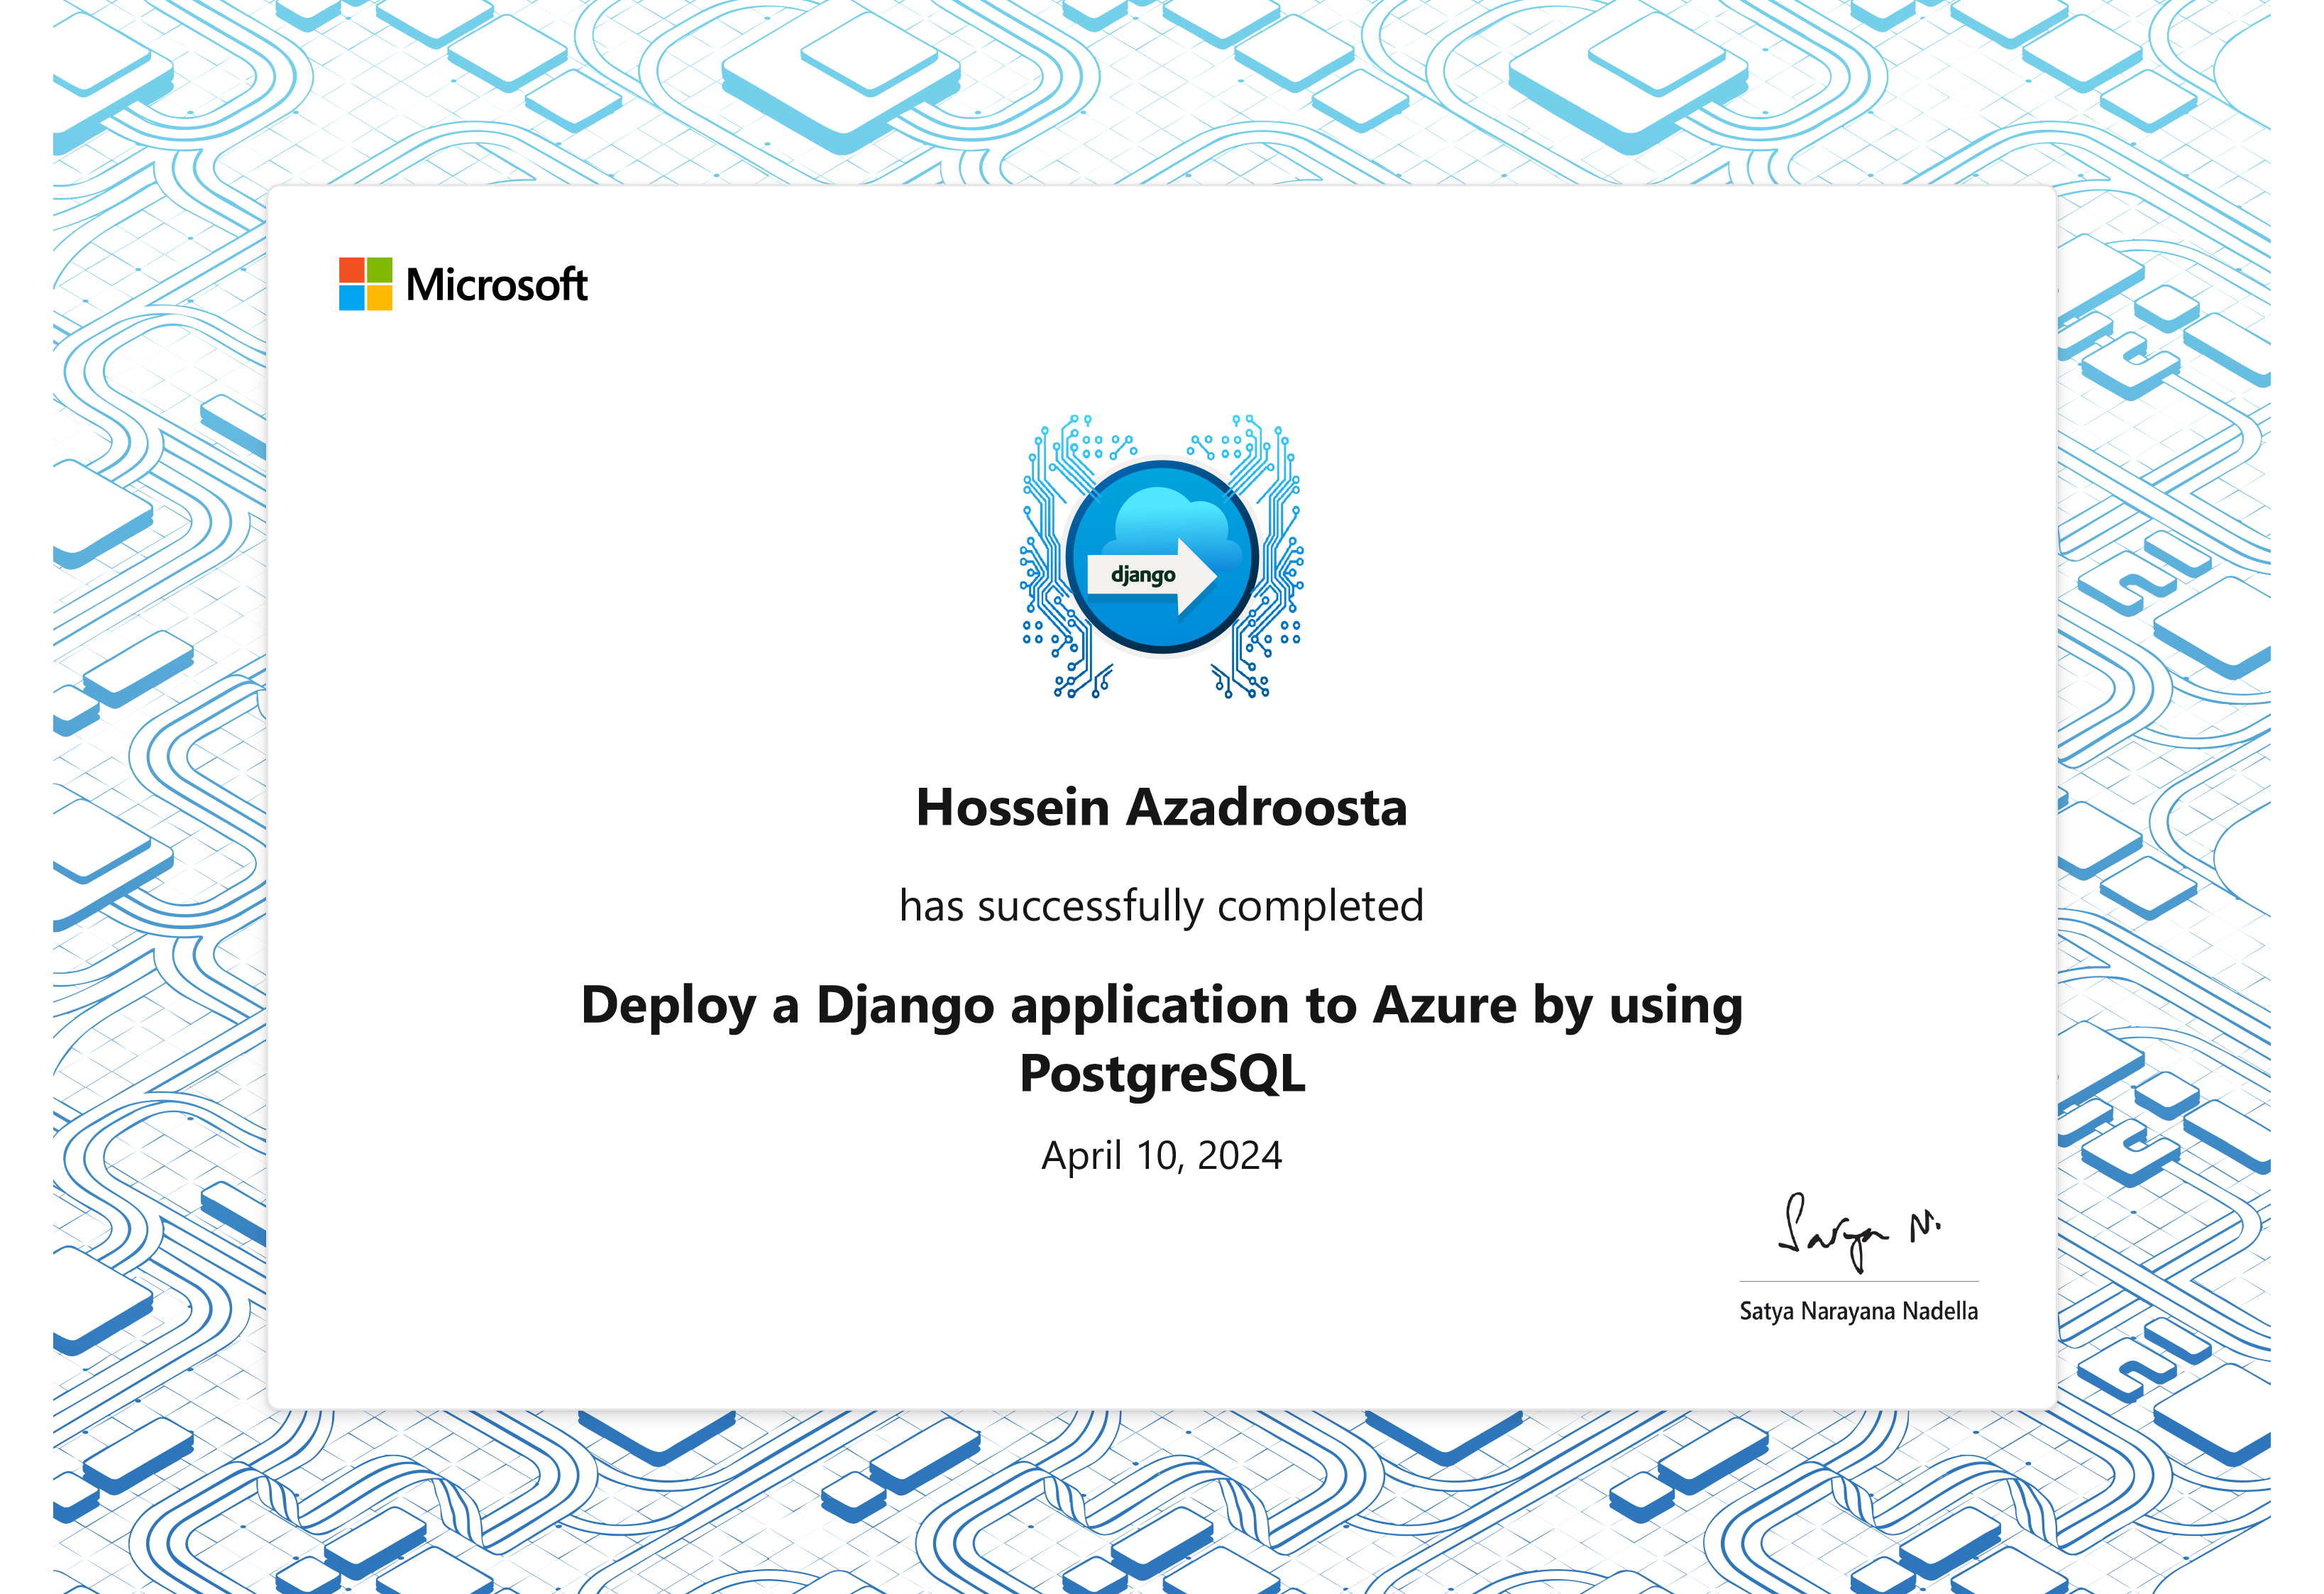 Deploy a Django application to Azure by using PostgreSQL